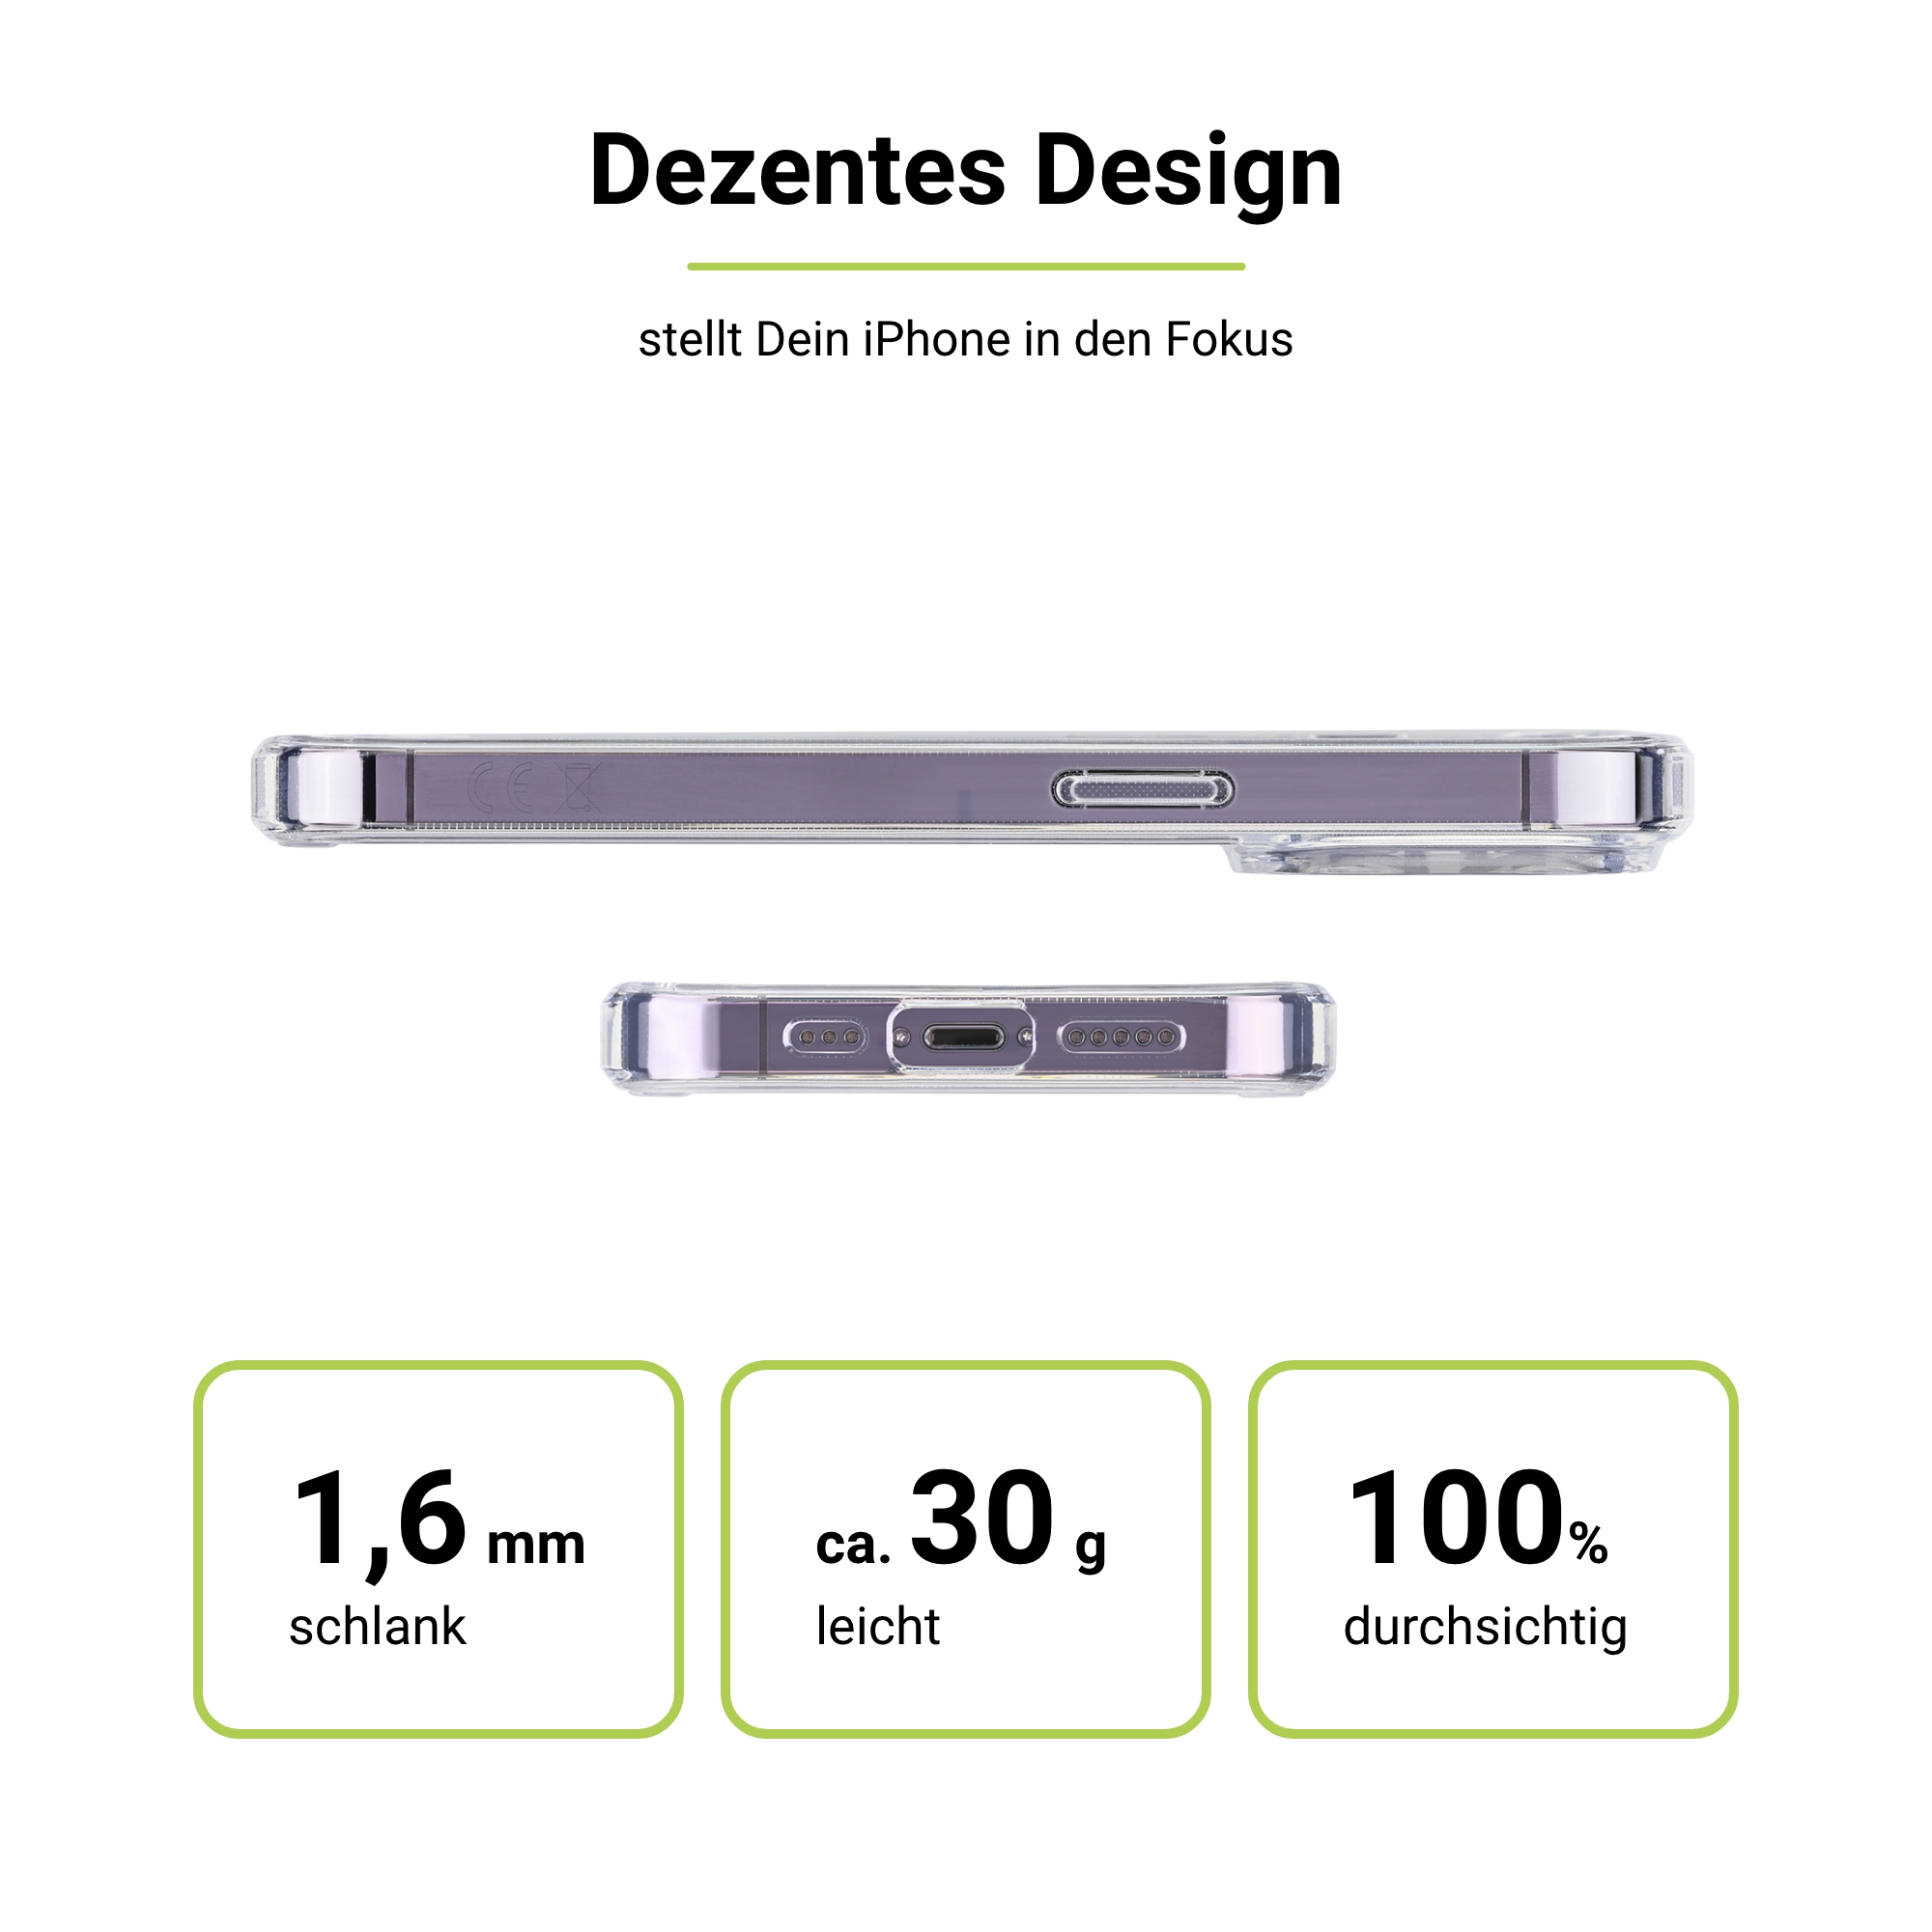 ARTWIZZ Apple, Transluzent iPhone Pro, Backcover, IcedClip, 14